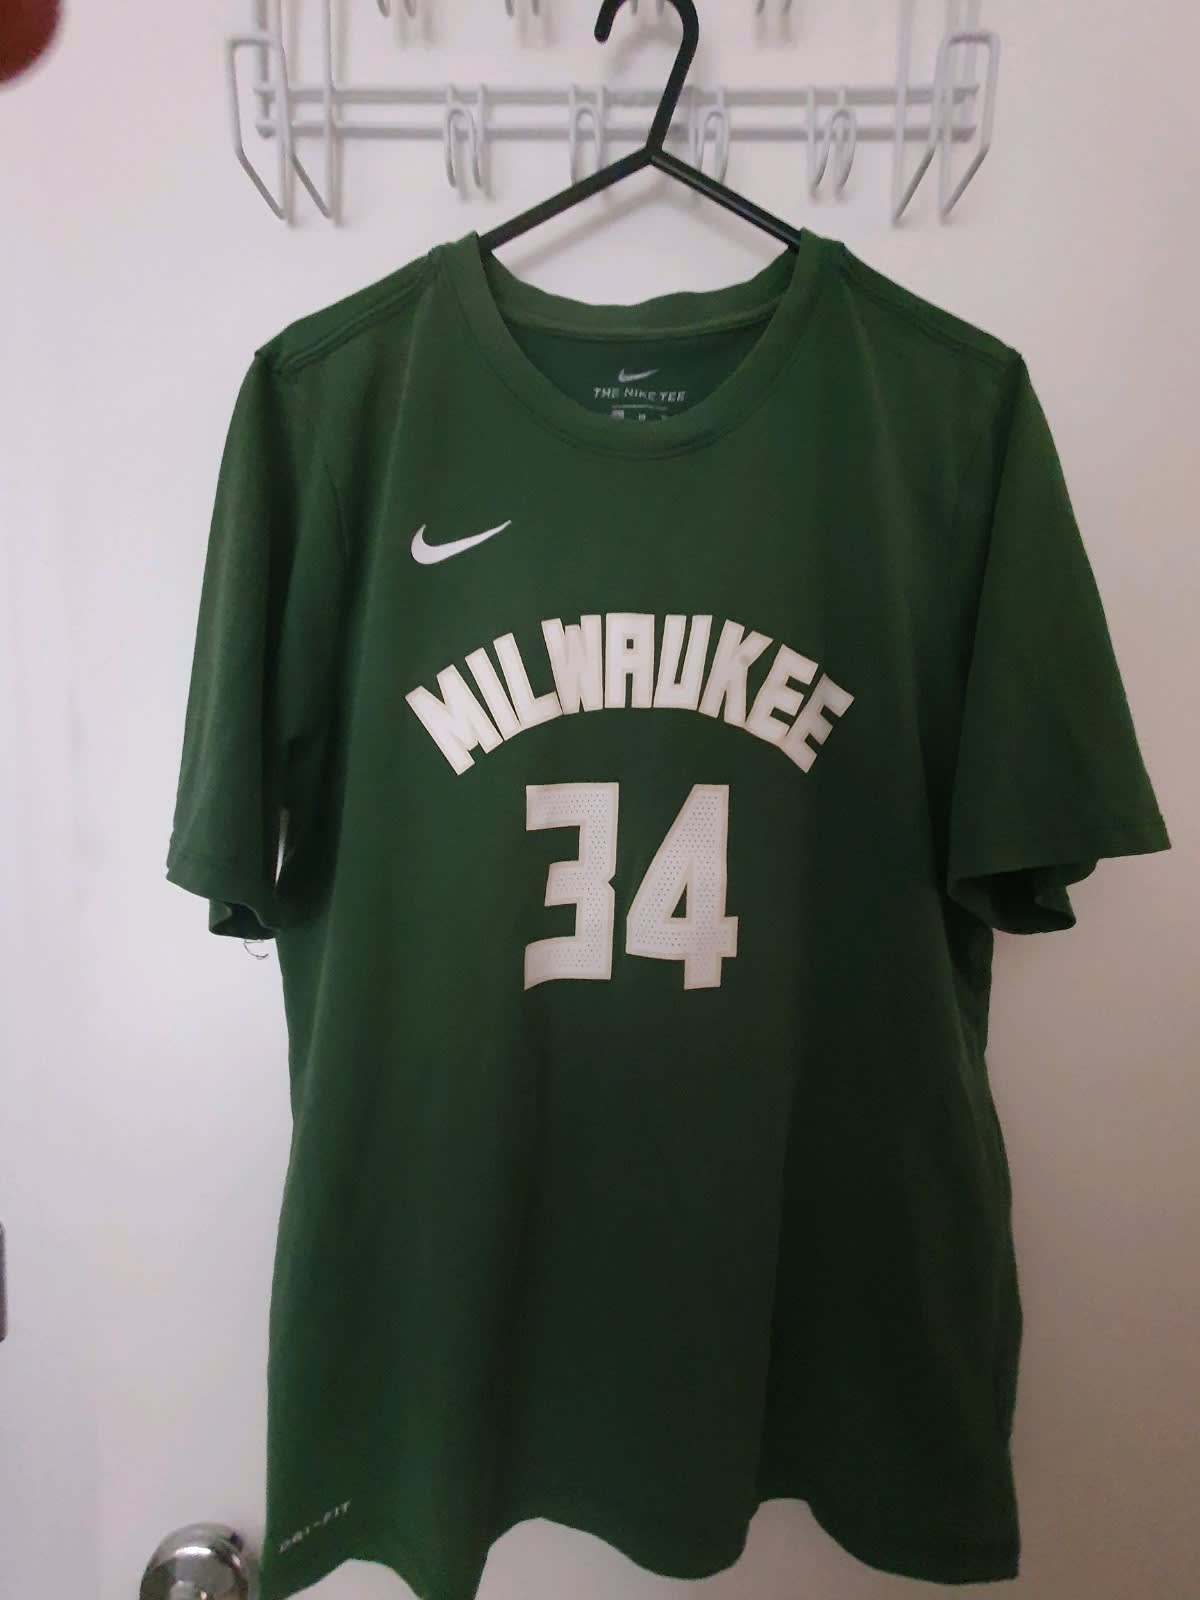 Nike Men's Milwaukee Bucks Giannis Antetokounmpo Name & Number T-Shirt, Green, Size: Large, Cotton